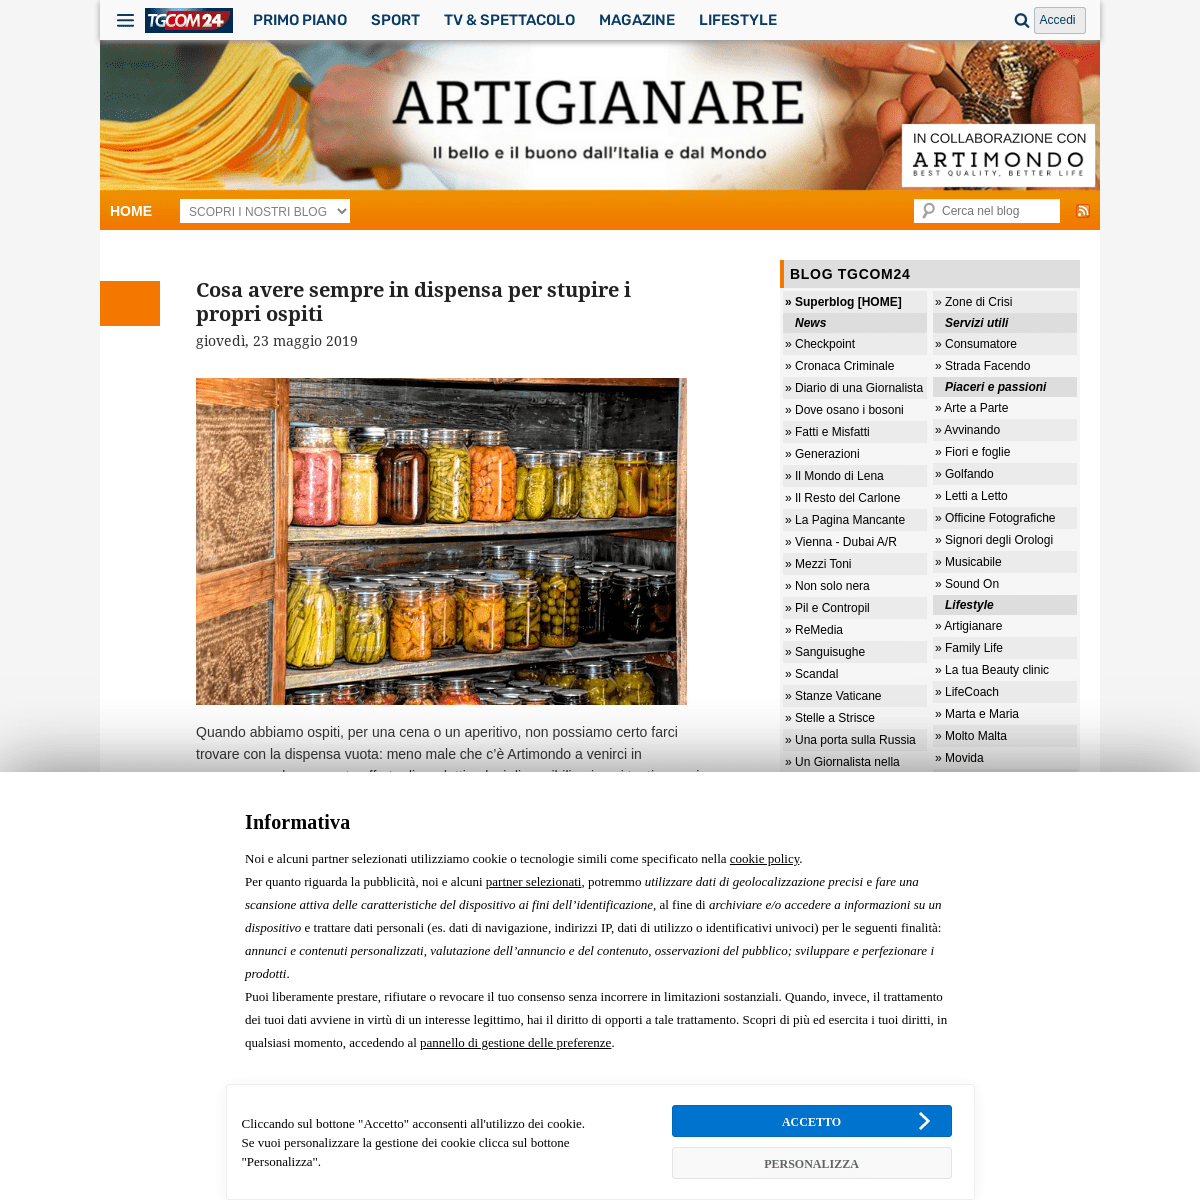 A complete backup of http://artigianare.tgcom24.it/